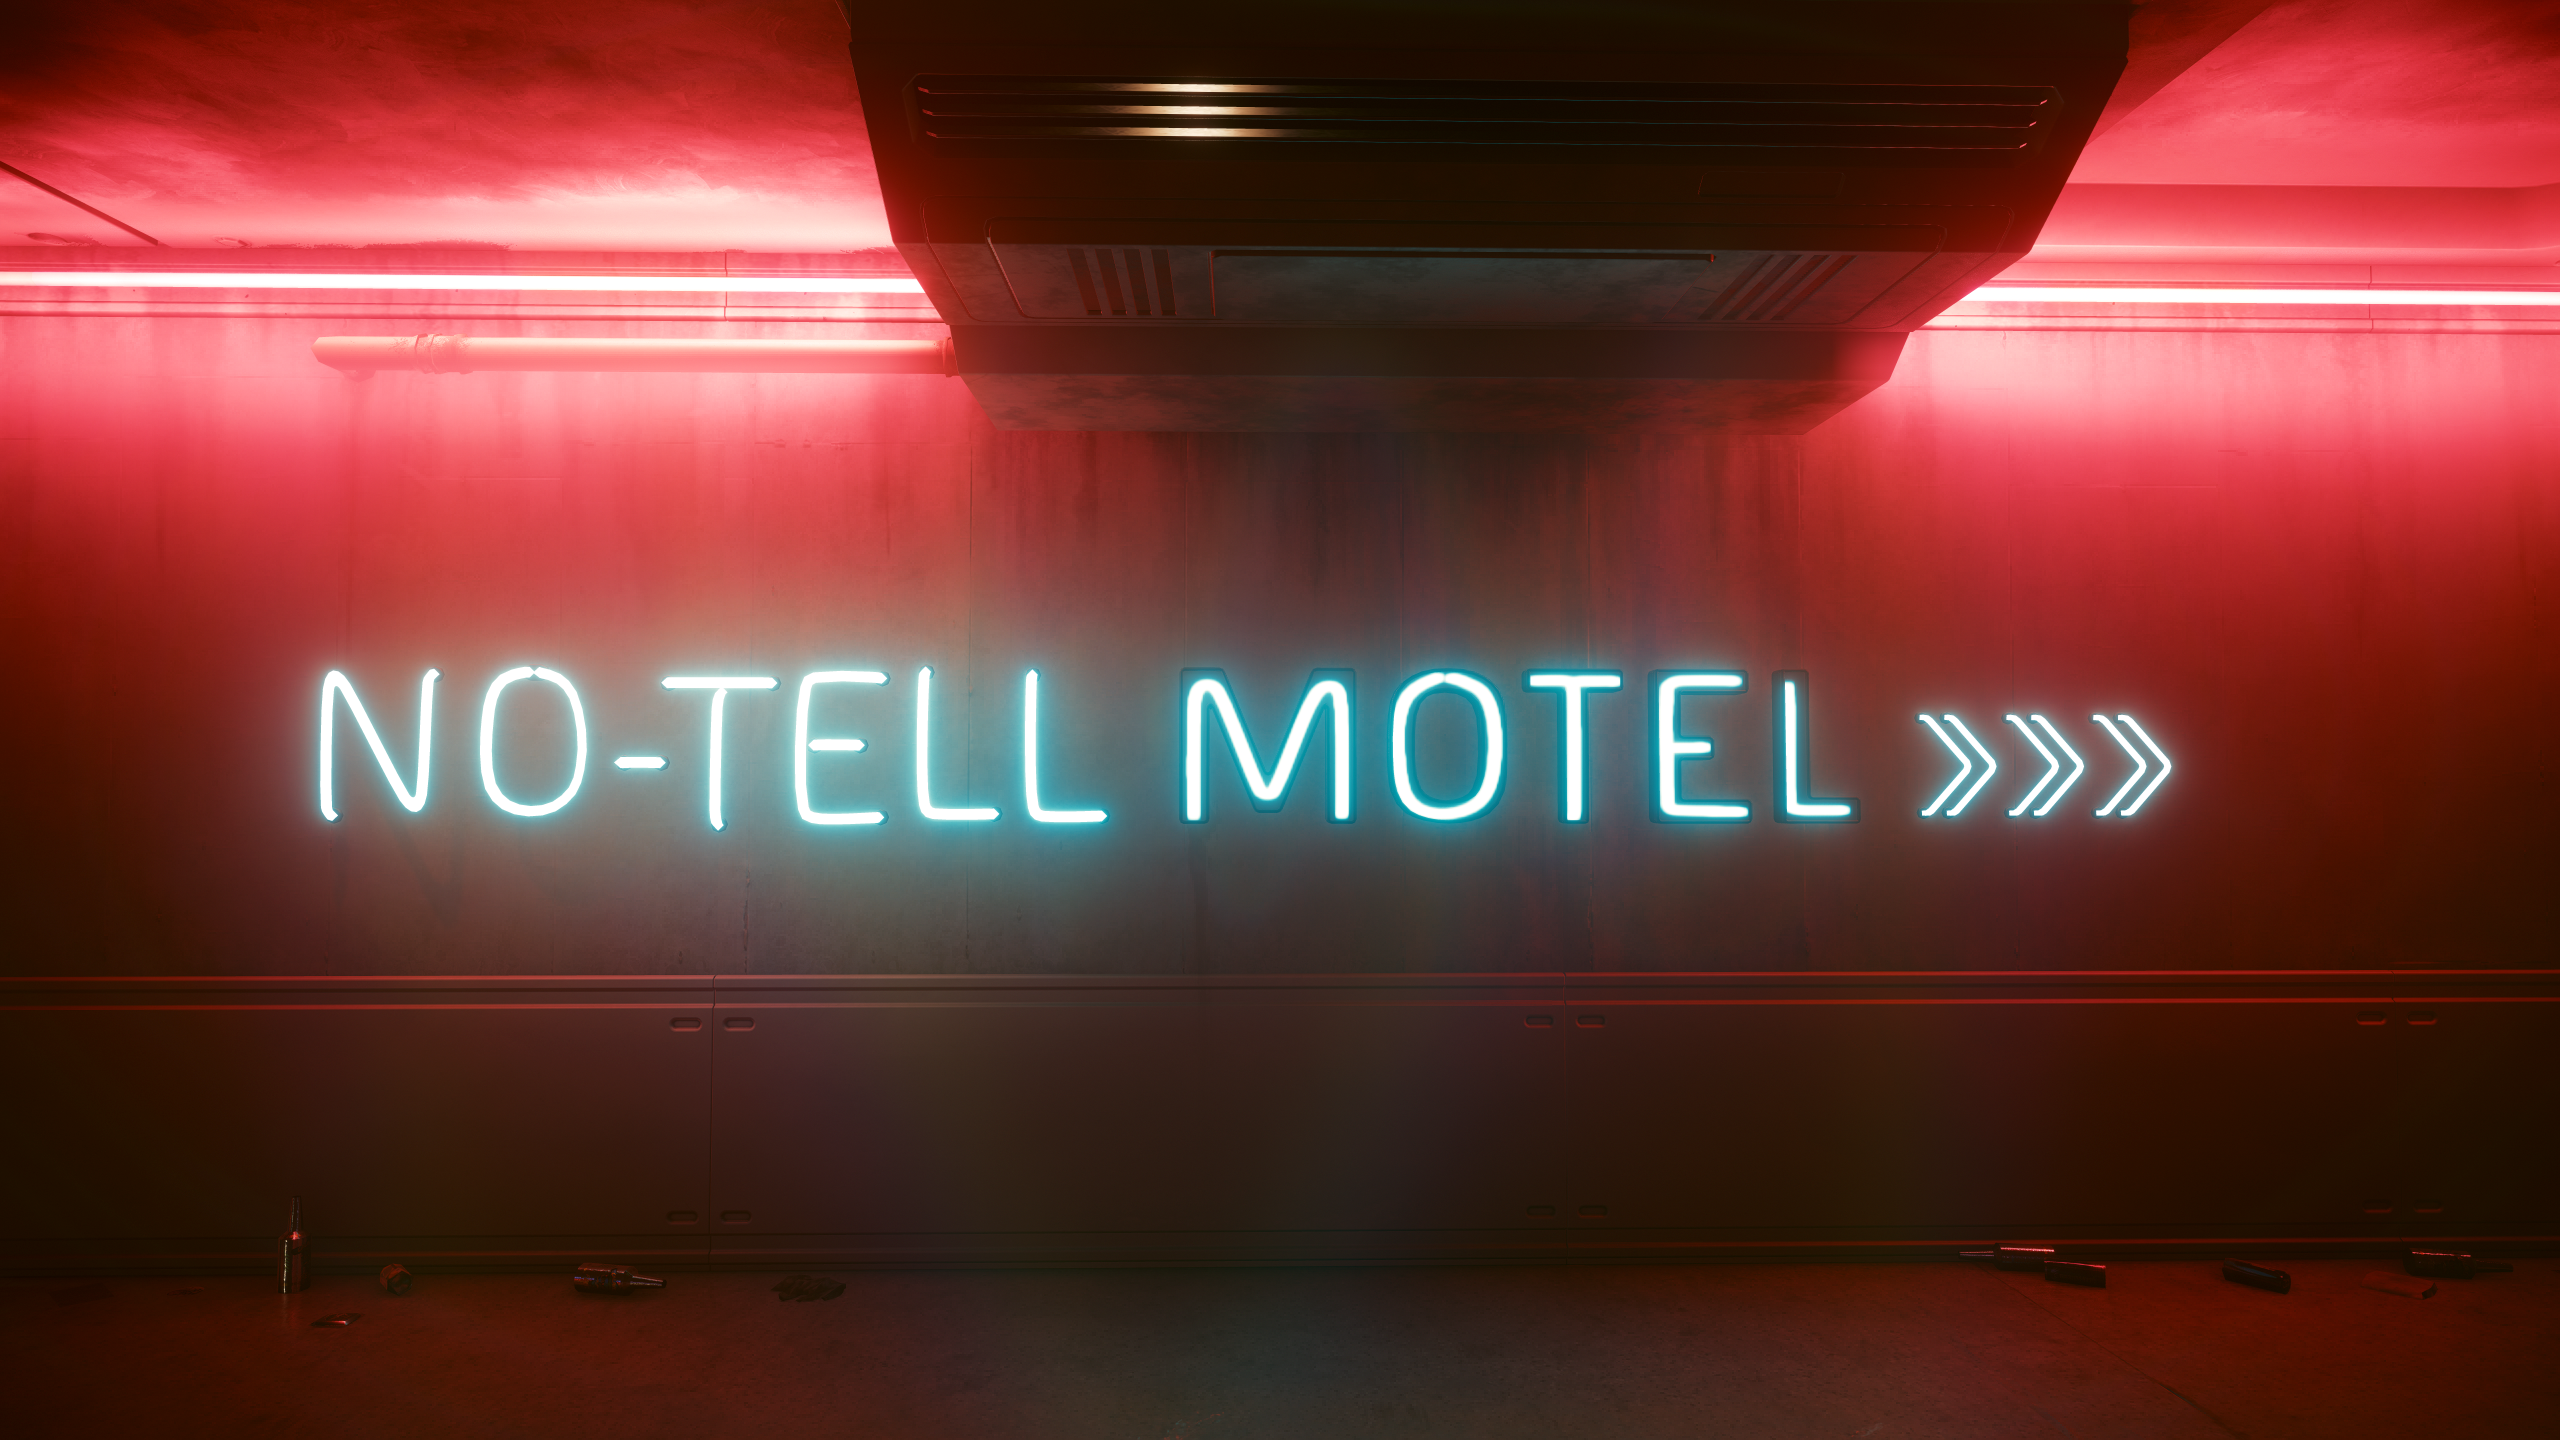 General 2560x1440 Cyberpunk 2077 neon motel screen shot minimalism video games simple background CGI